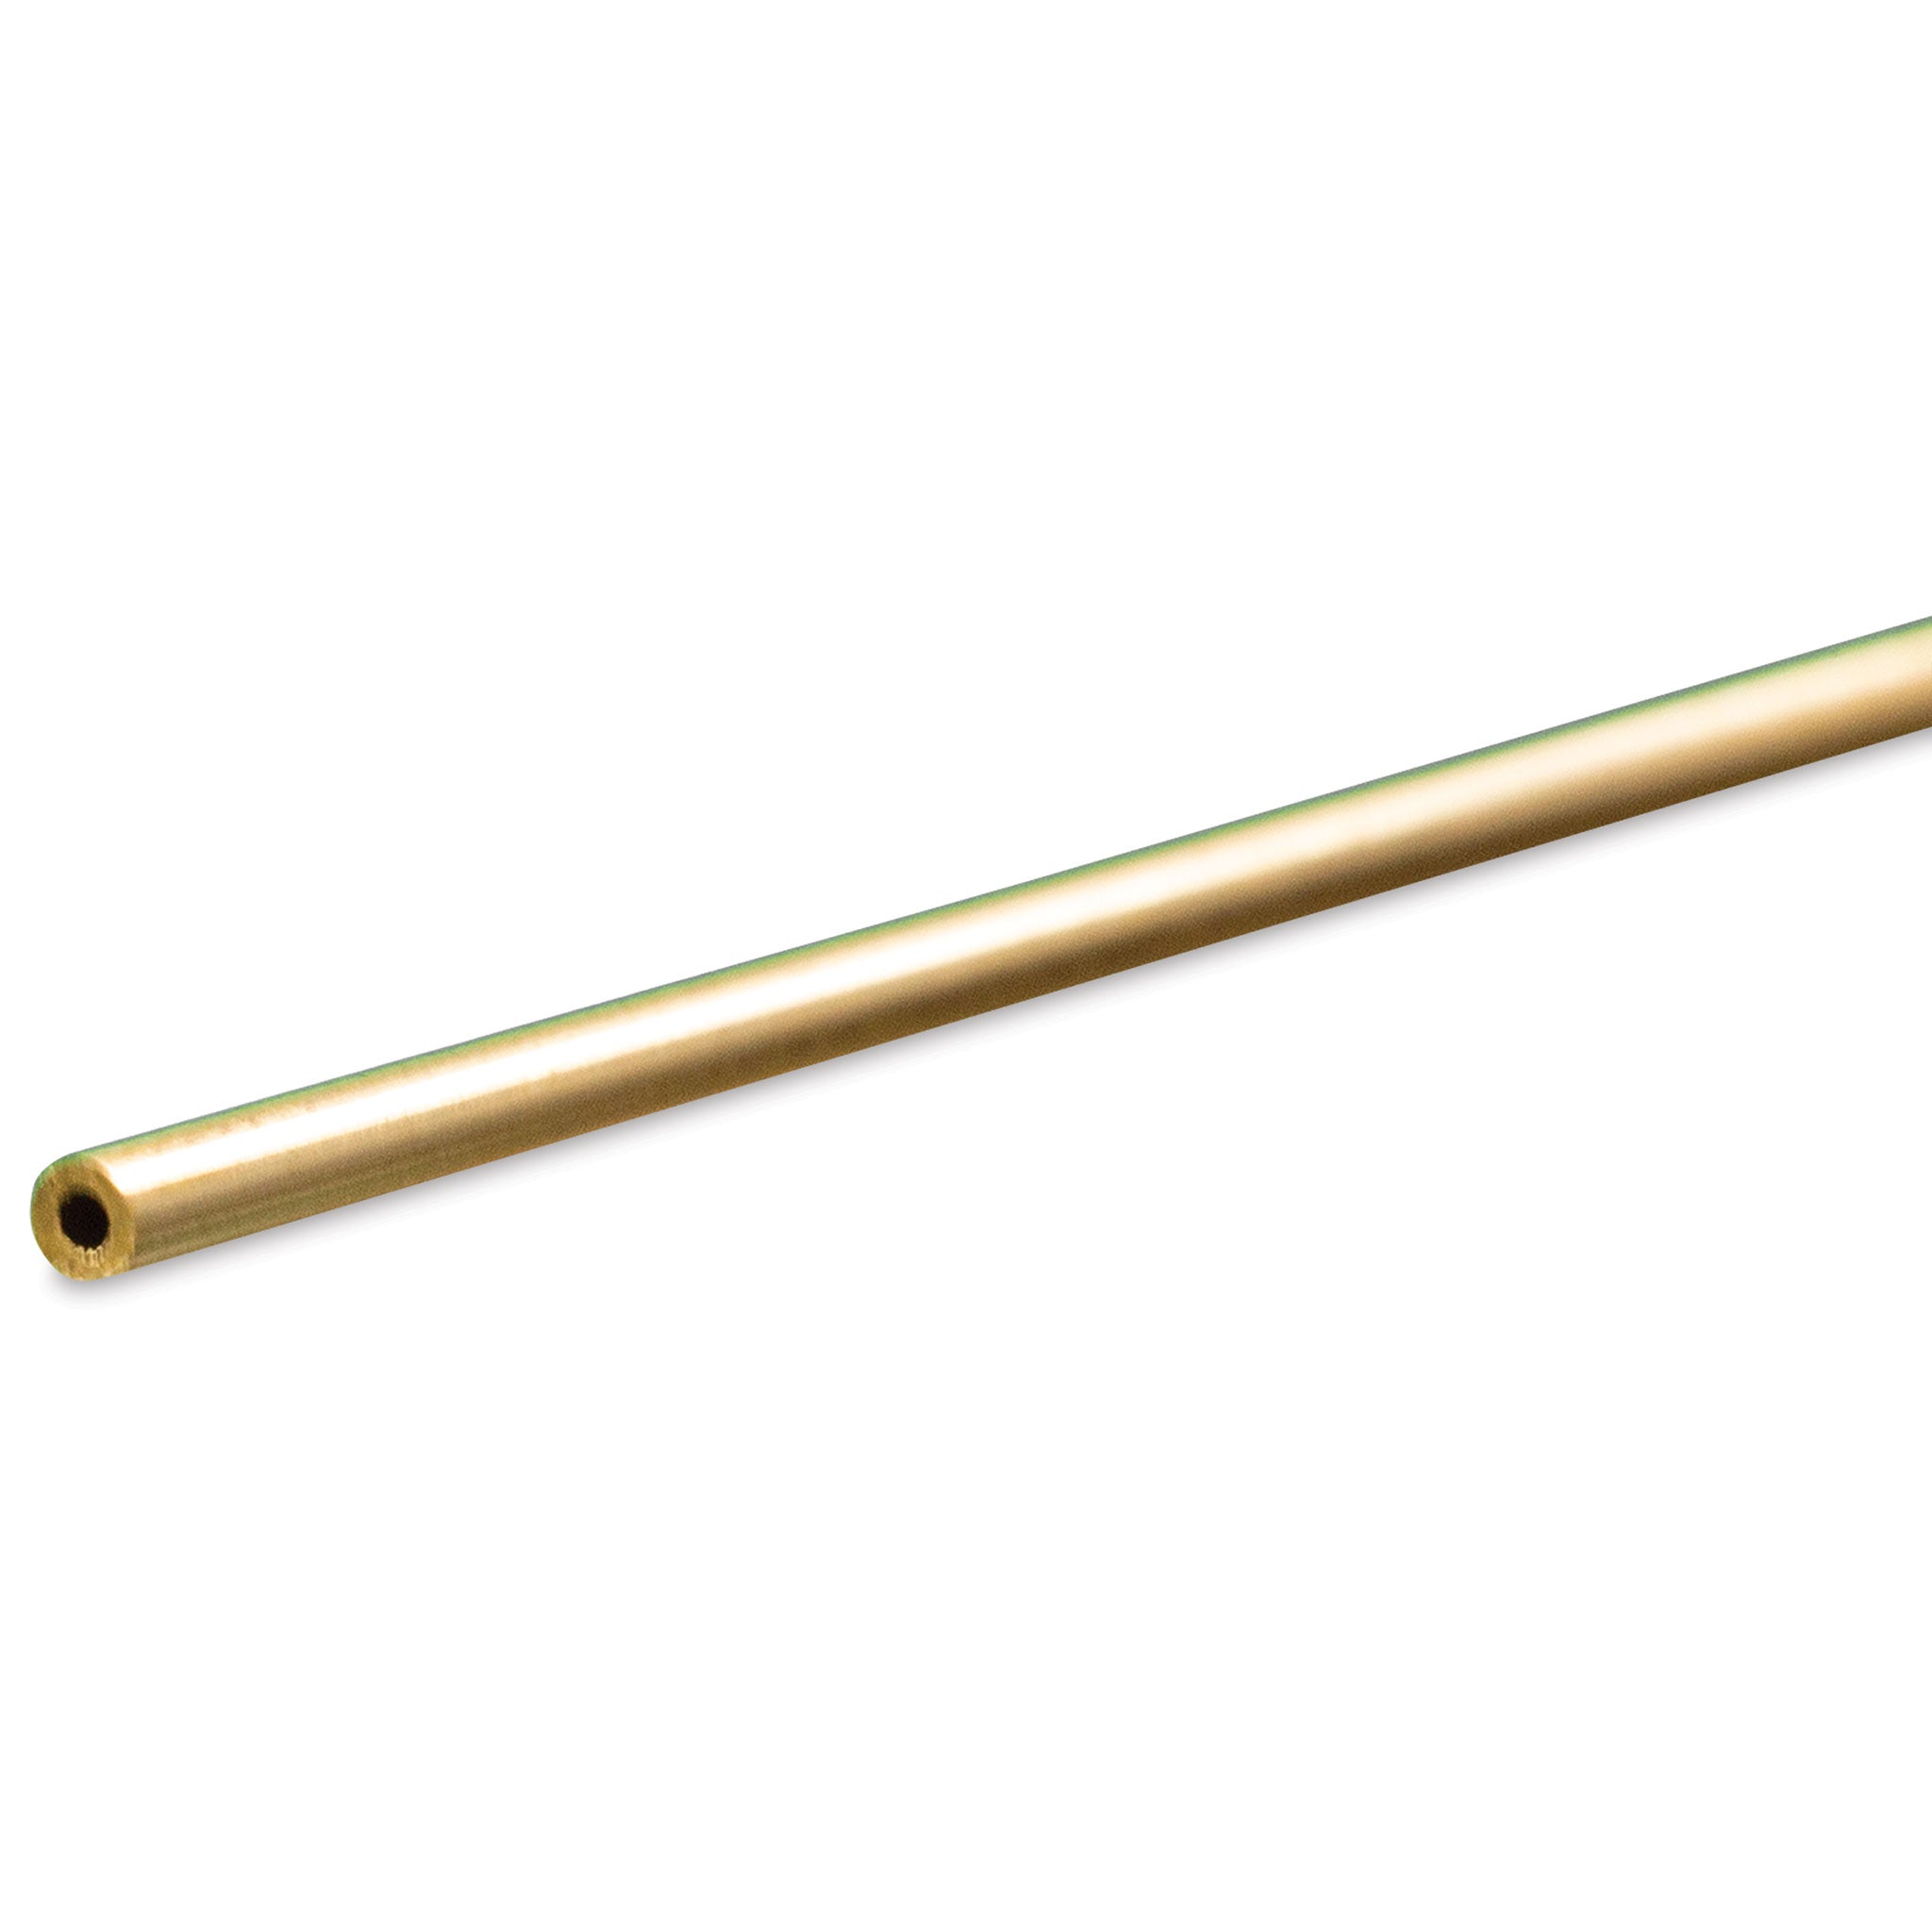 K&S Metals 1143 Round Brass Tube 1/16" OD x 0.014" Wall x 36" Long (1 Piece)